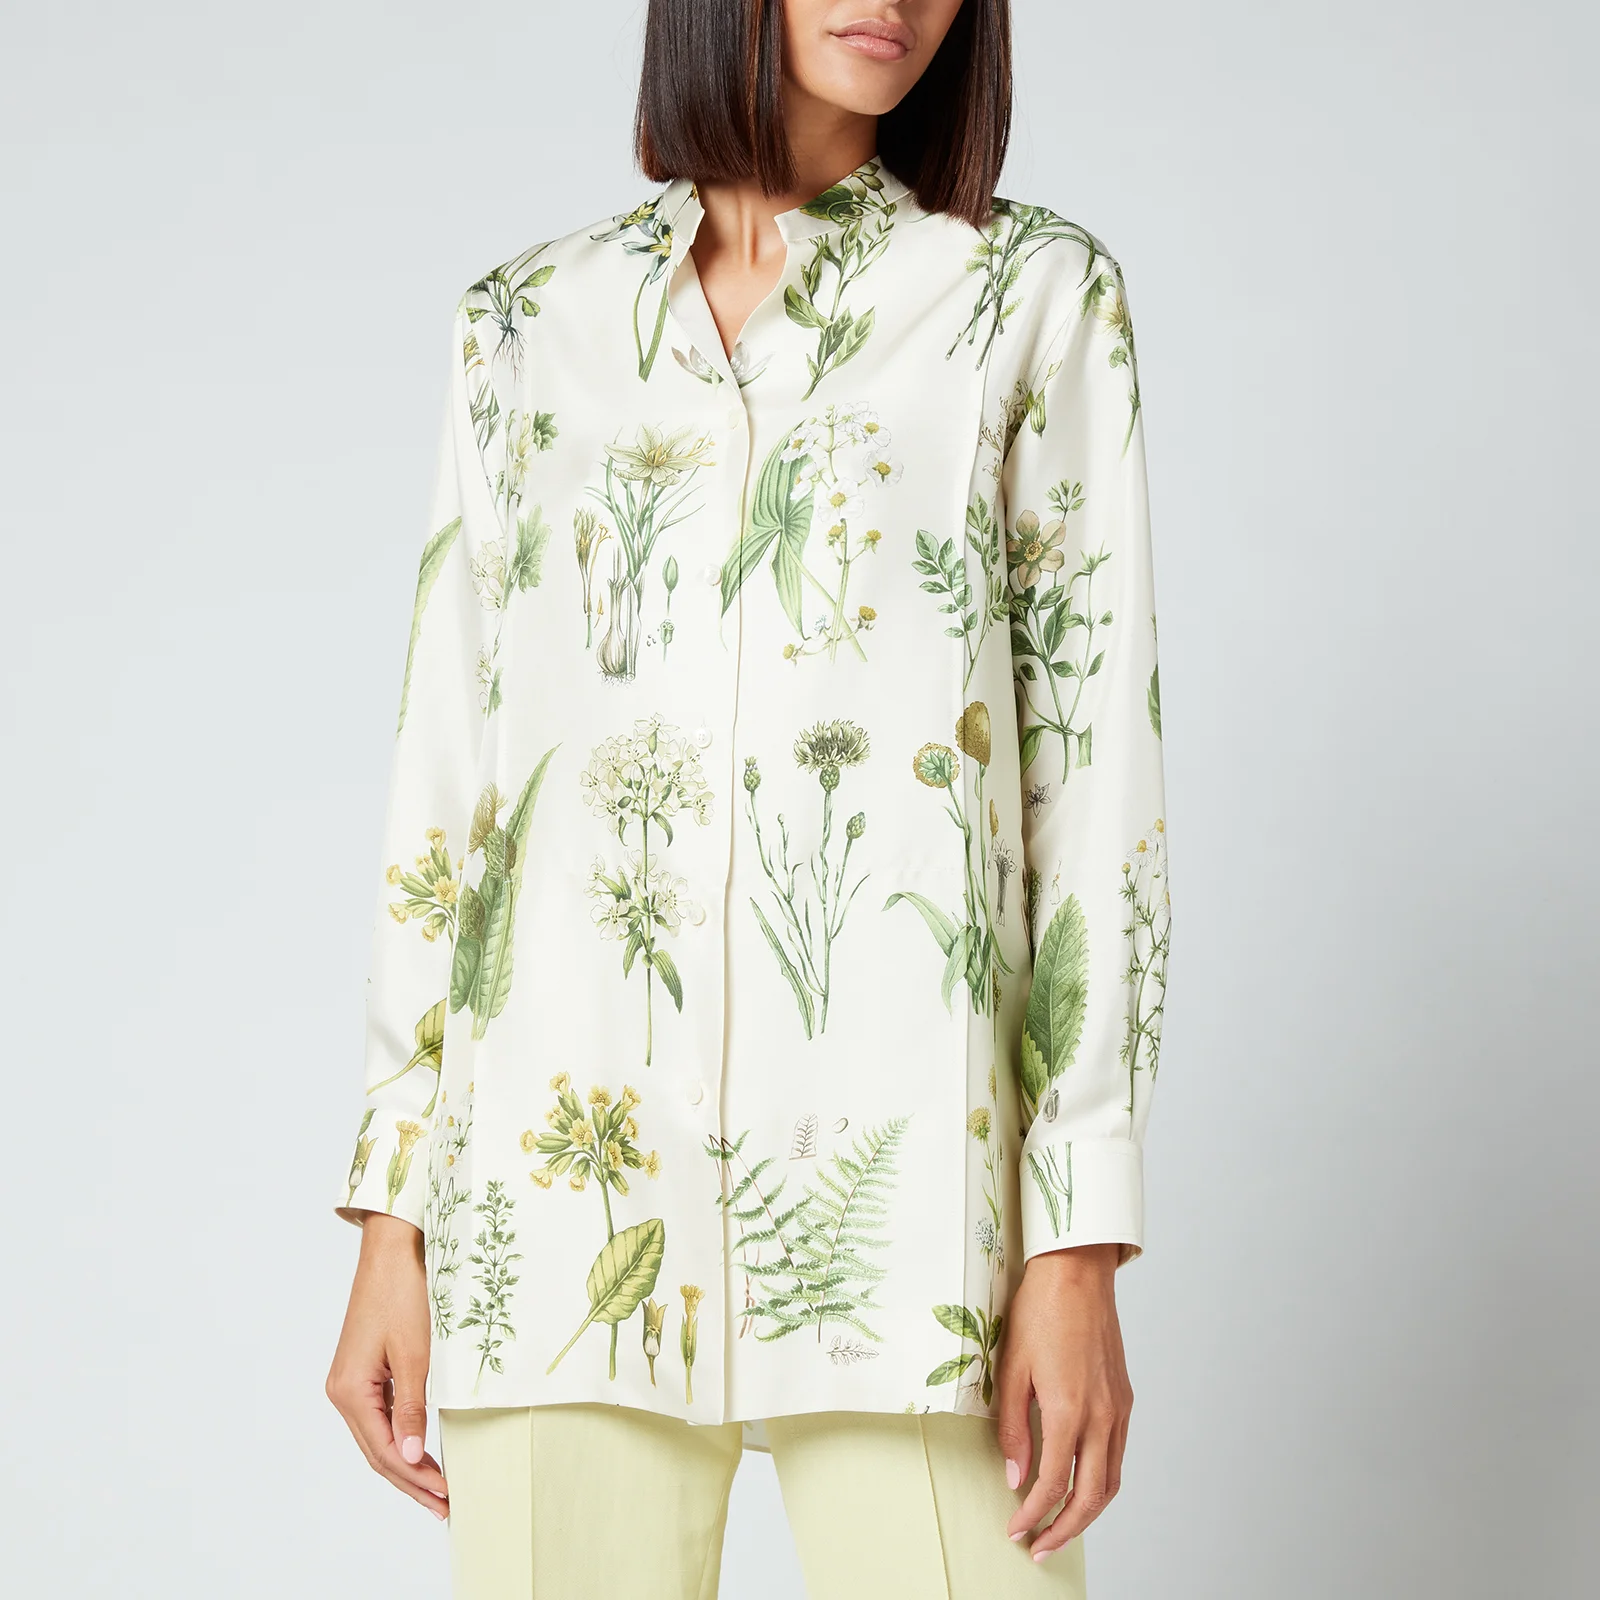 Salvatore Ferragamo Women's Printed Leaf Shirt - Toni Hedren Green Image 1